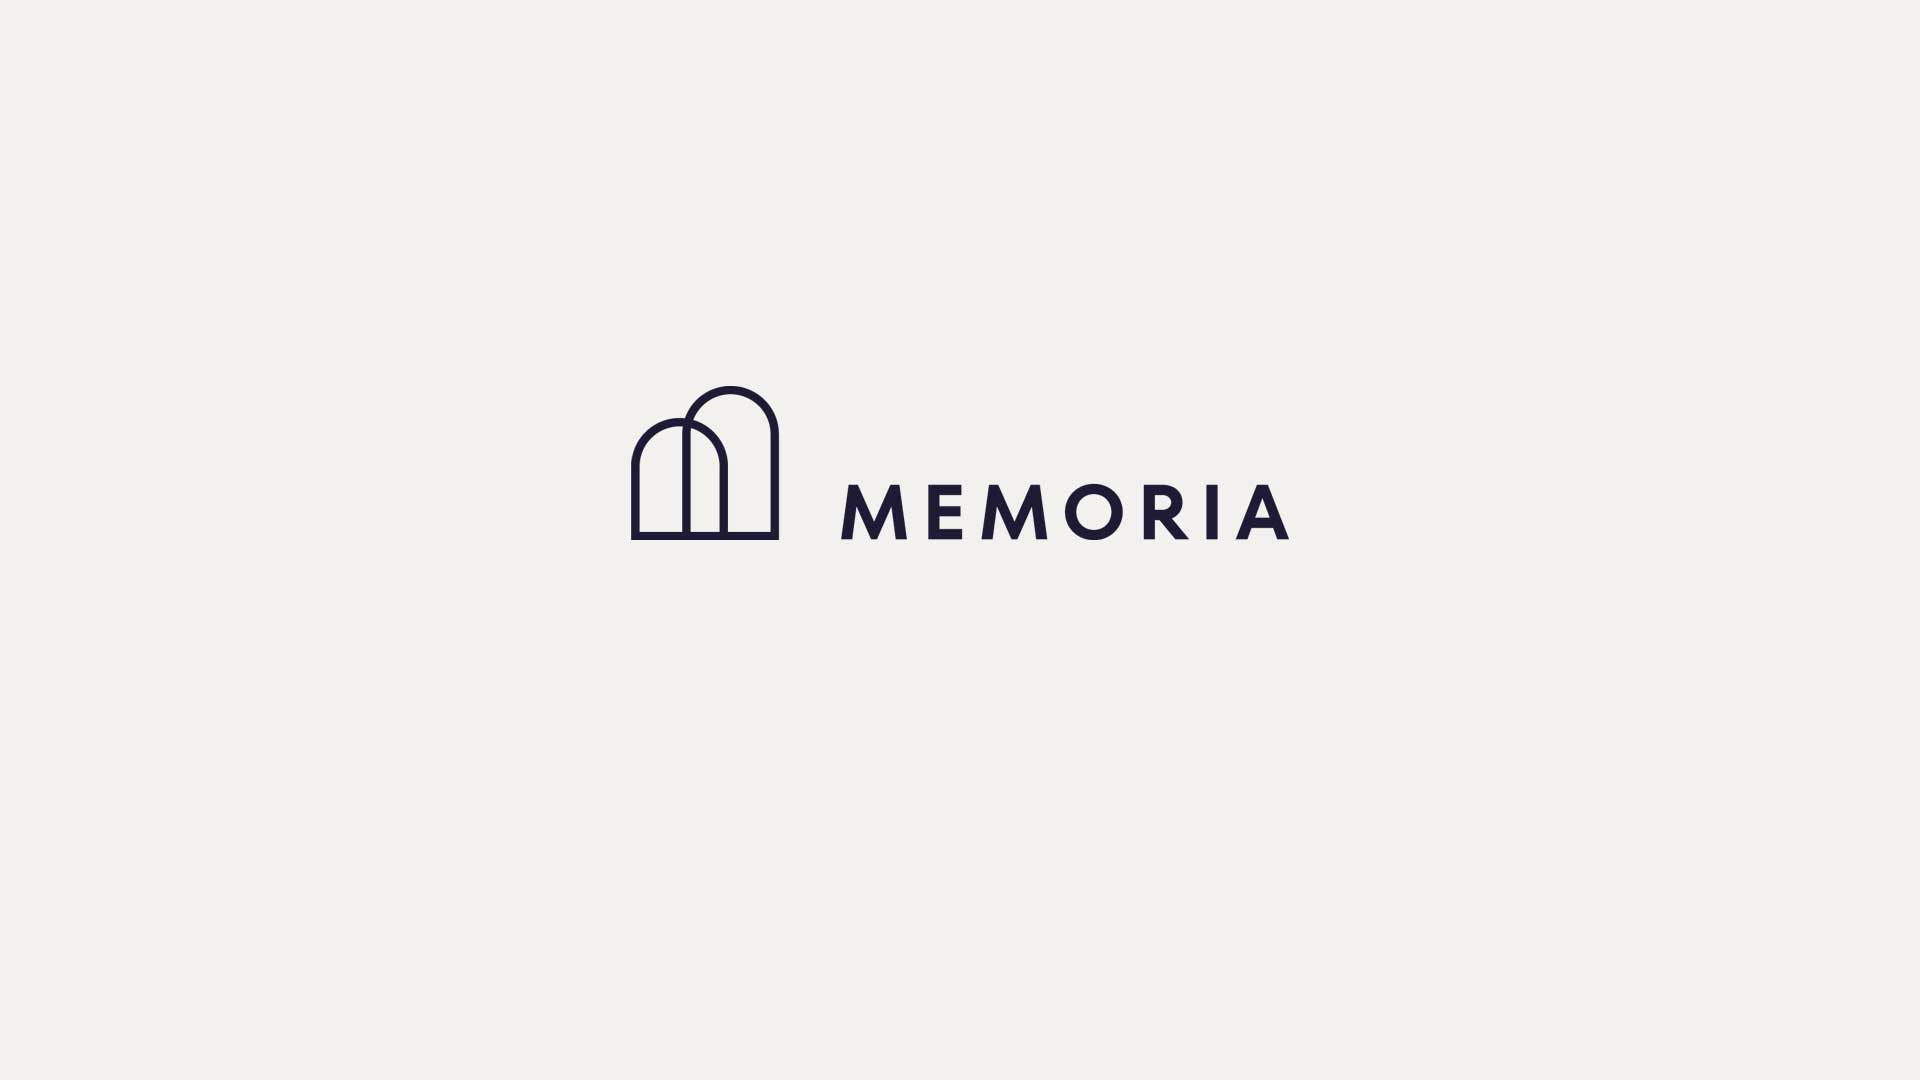 Memoria logo image